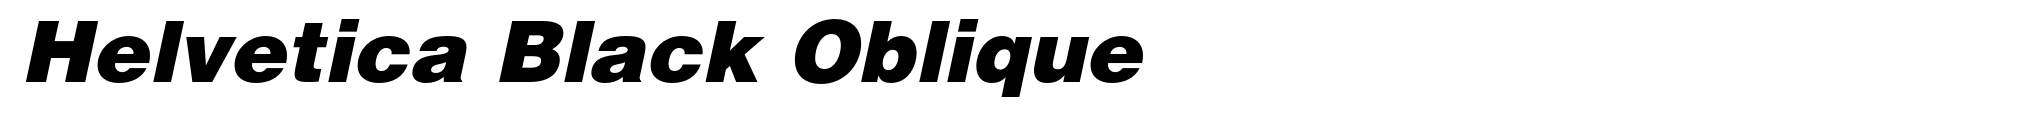 Helvetica Black Oblique image